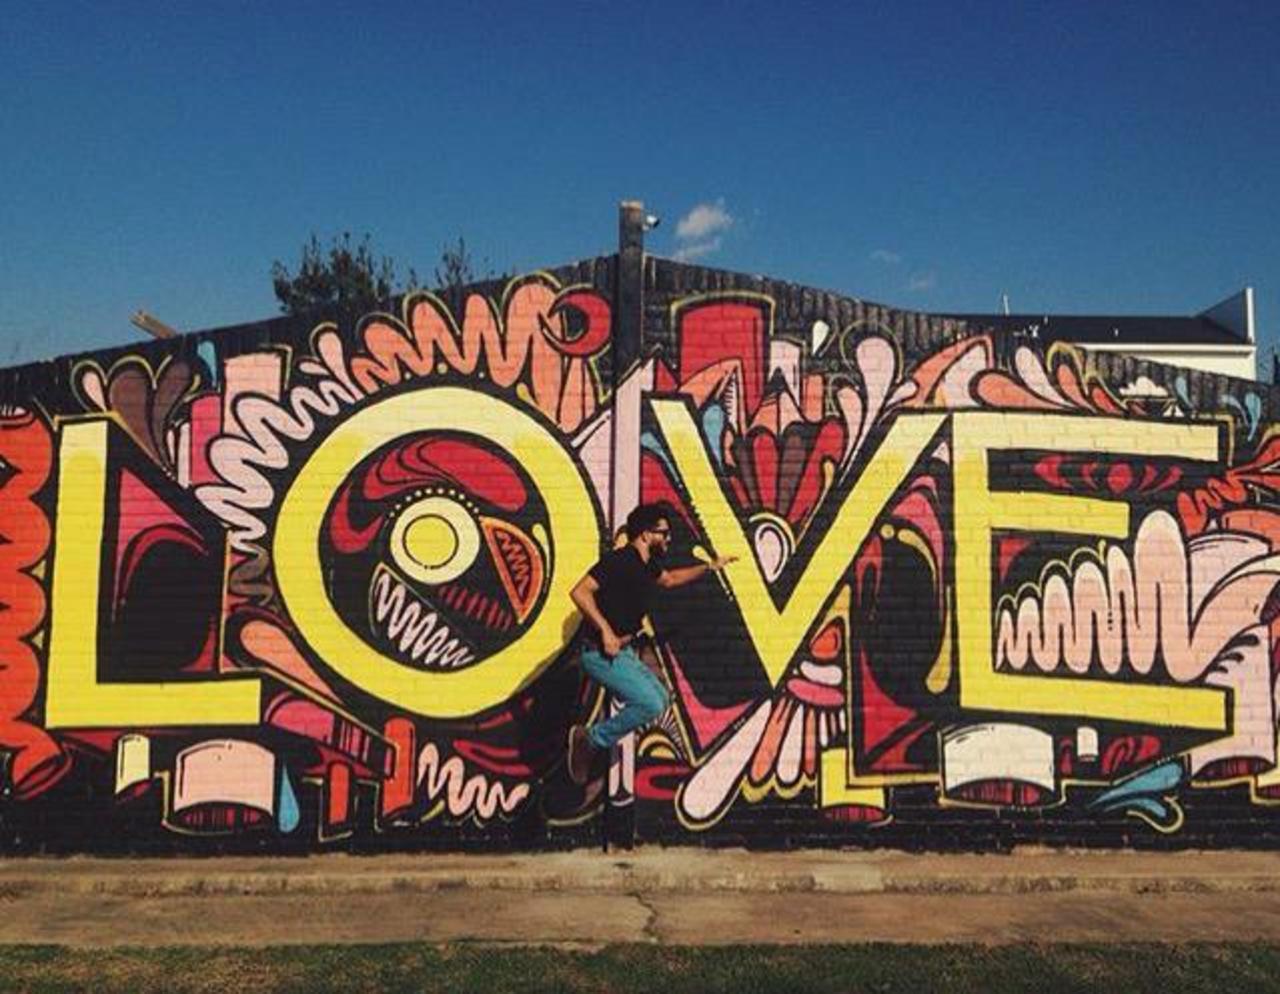 Love ❤️
Street Art by WileyArt

#art #graffiti #mural #streetart http://t.co/2vWGNlpP07